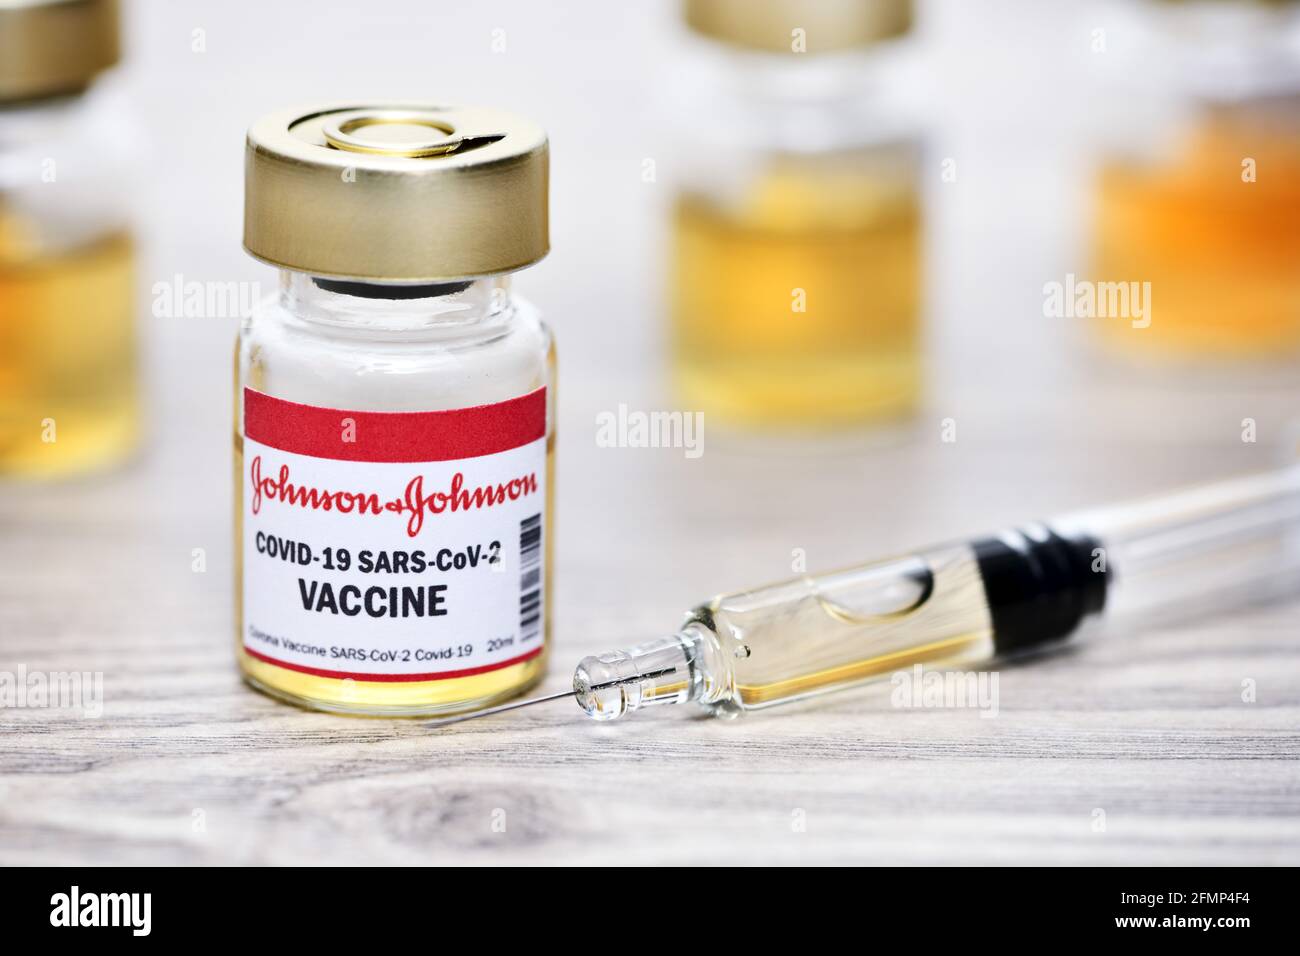 Covid Vaccine Of Johnson And Johnson, Symbolic Image Stock Photo